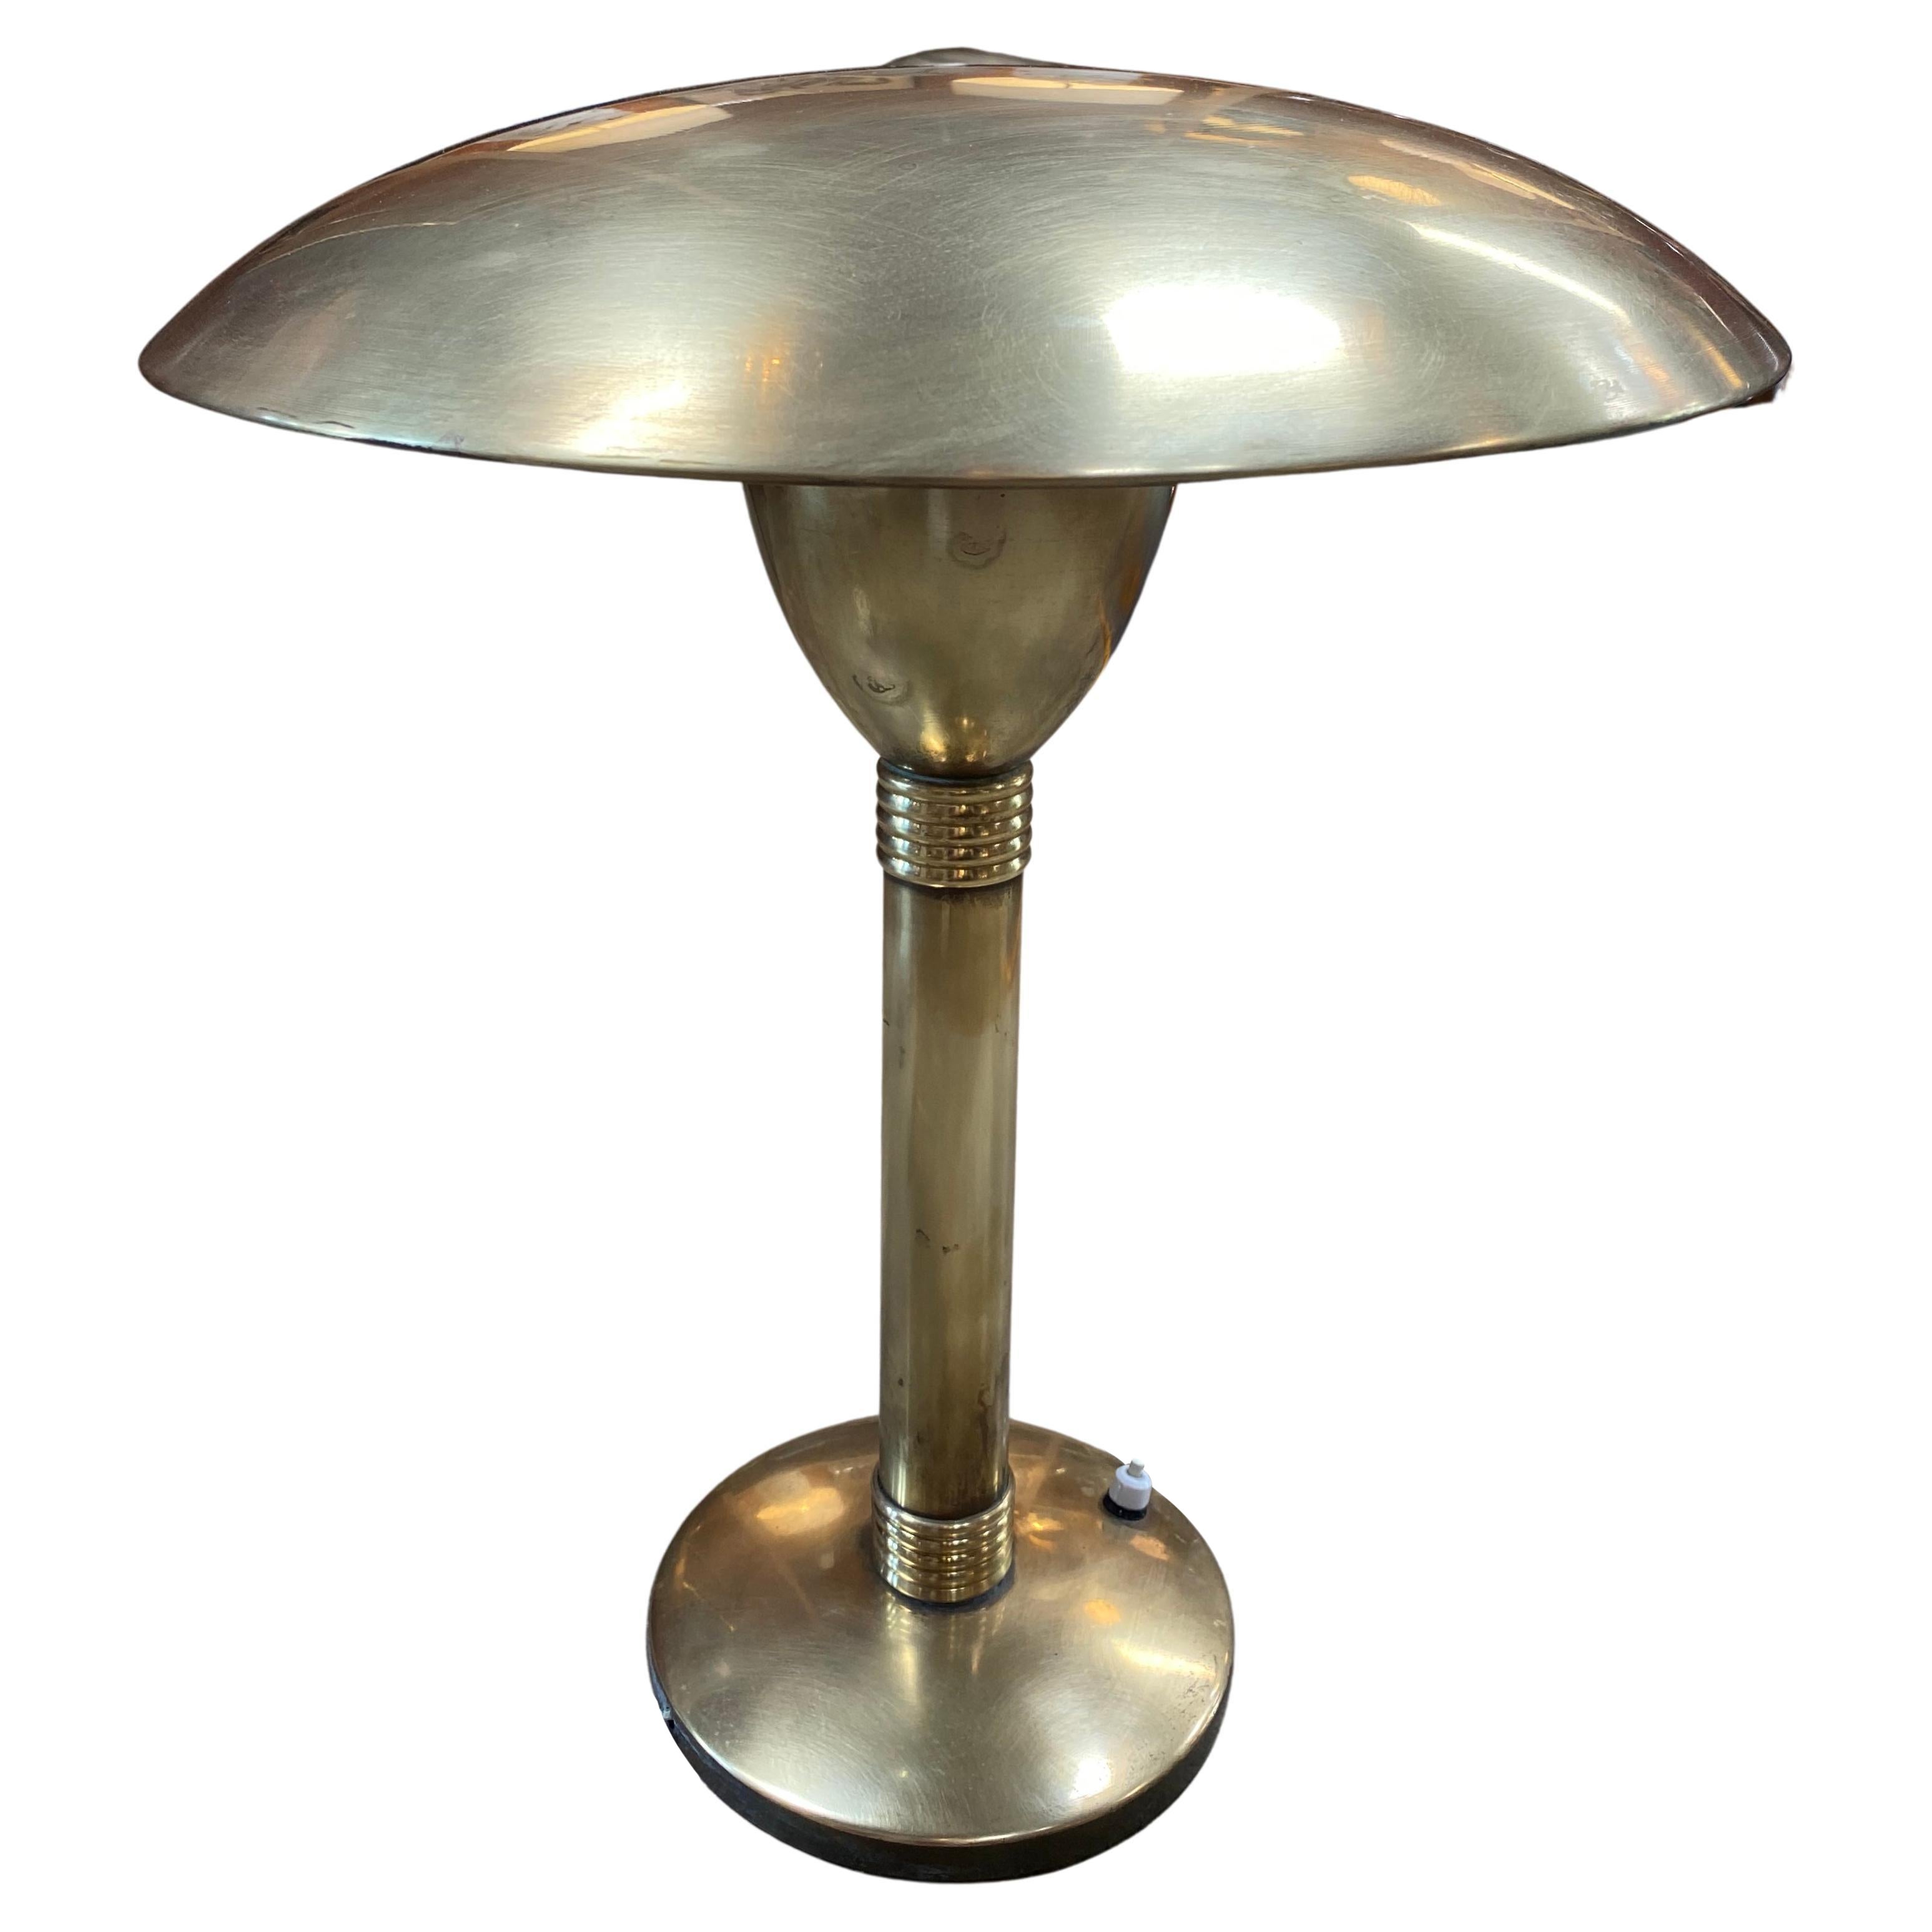 Italian Brass Table Lamp